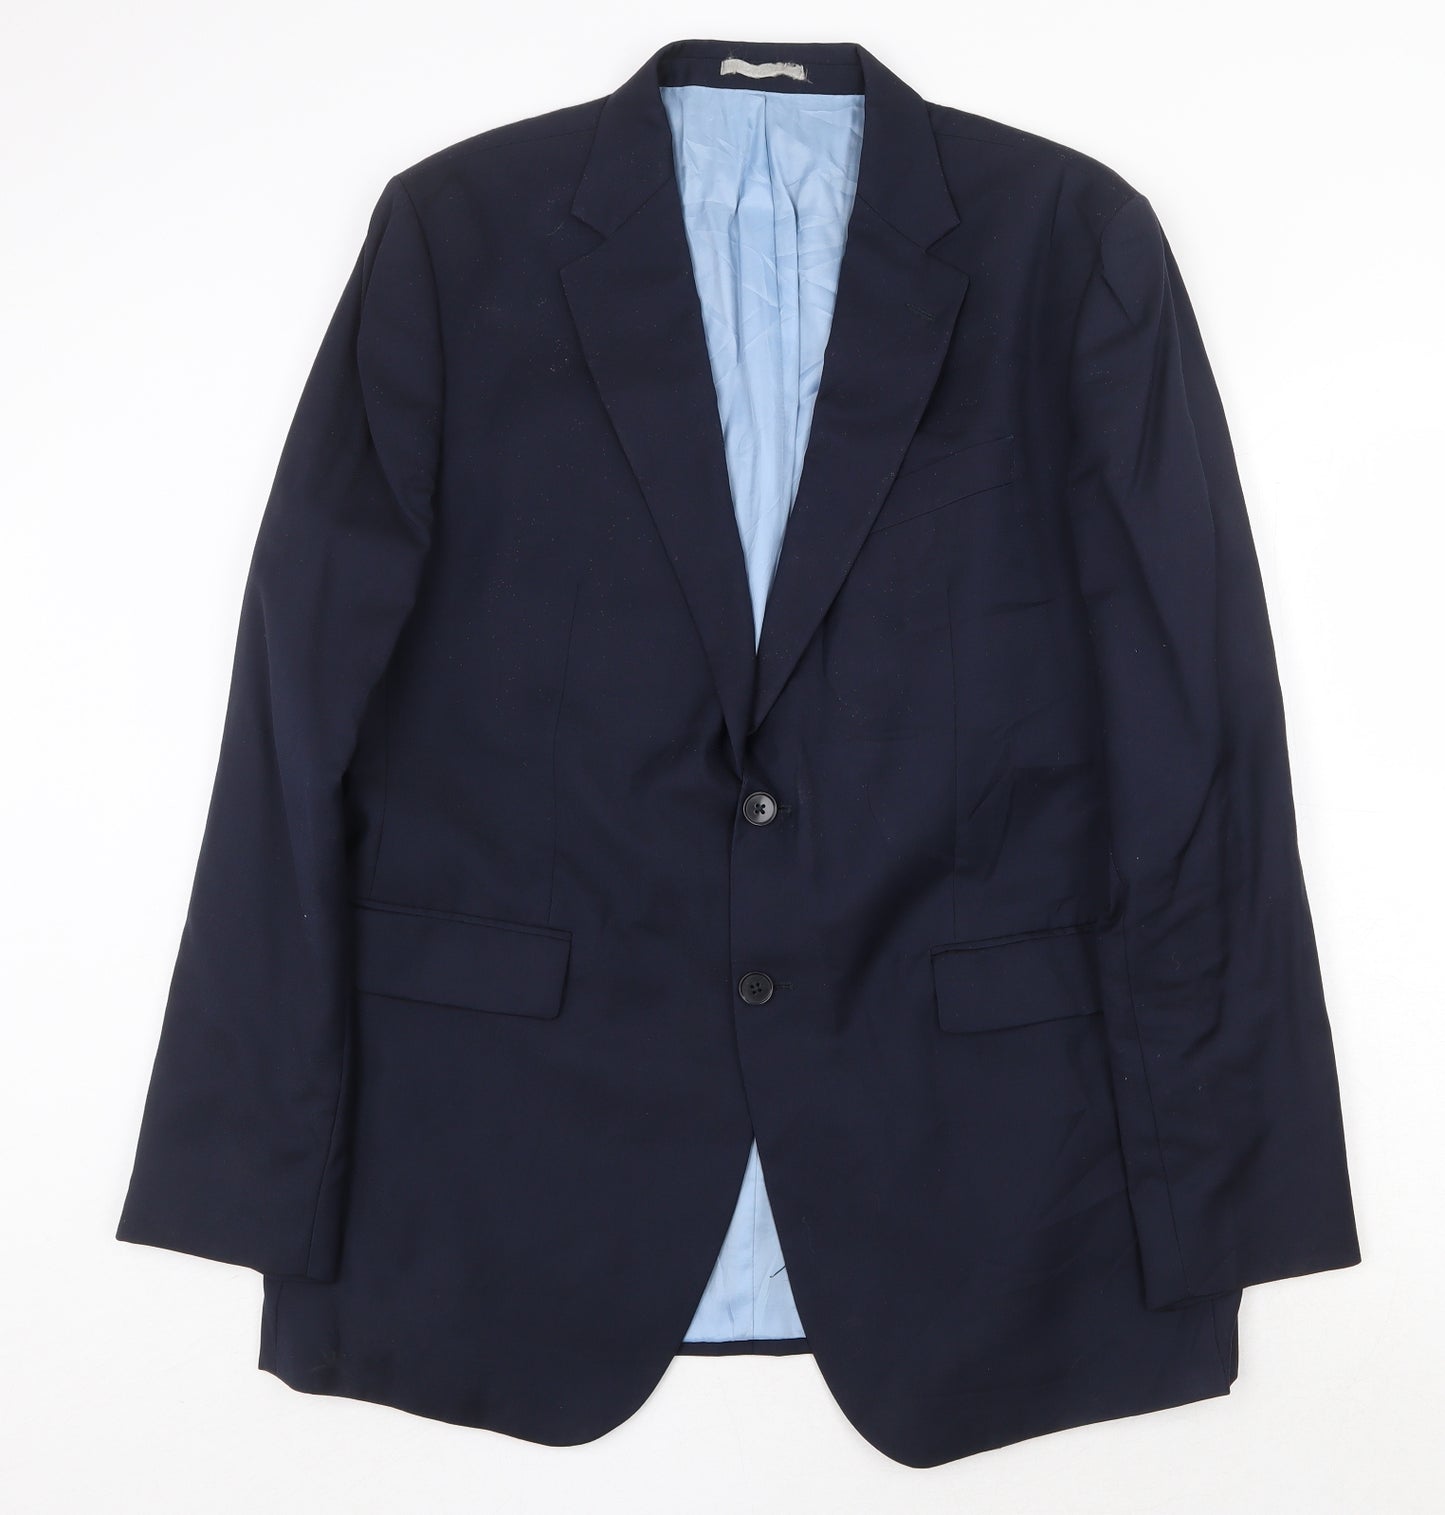 Charles Tyrwhitt Mens Blue Wool Jacket Suit Jacket Size 44 Regular